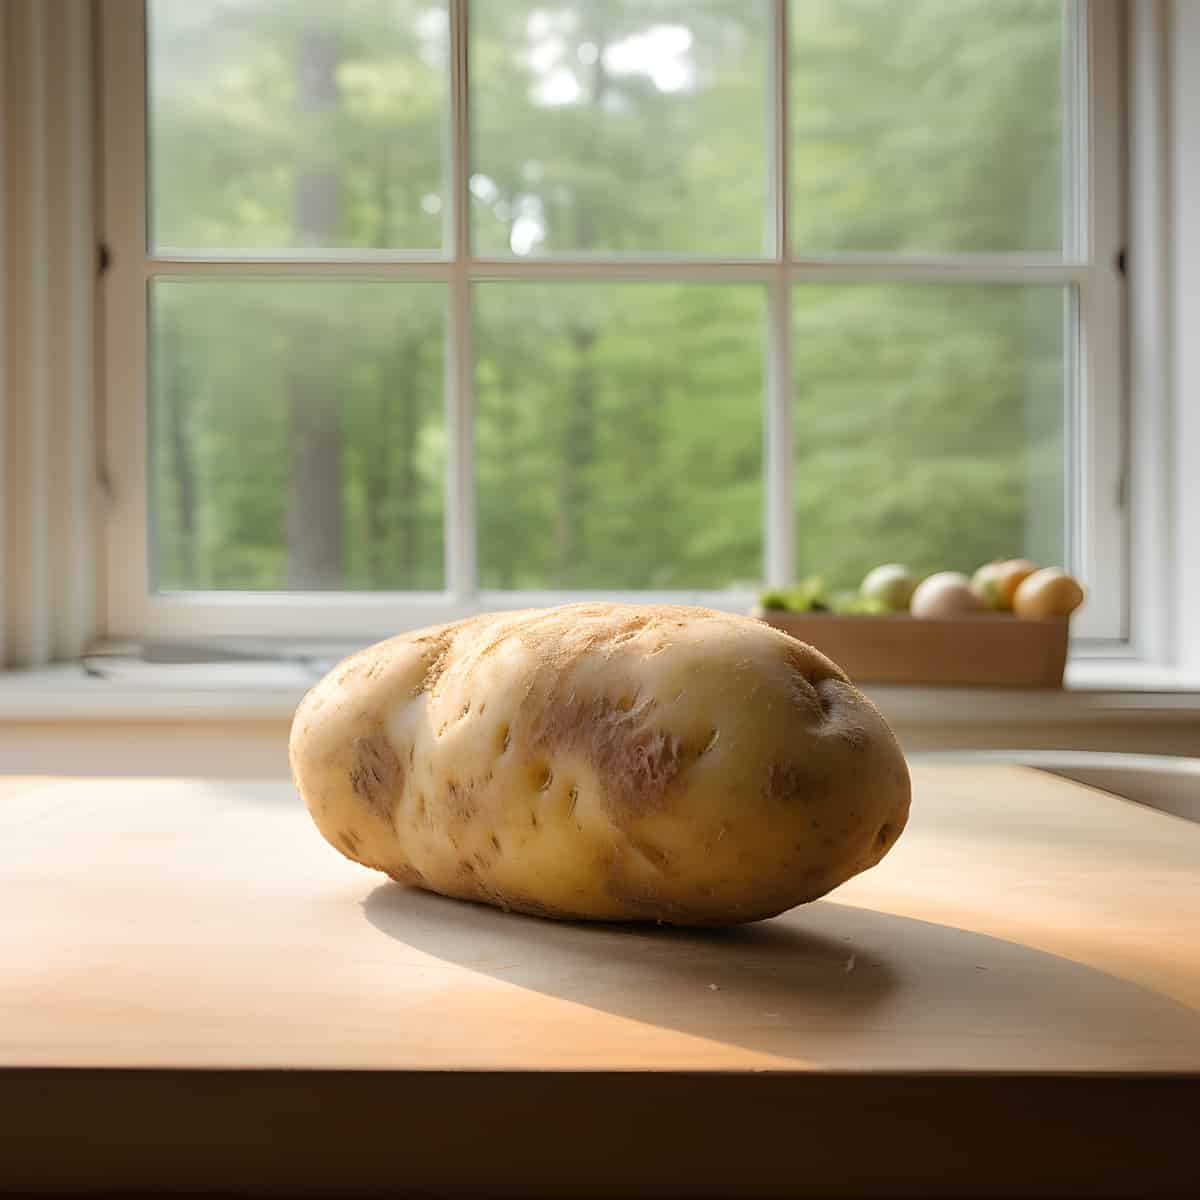 Heideniere Potatoes on a kitchen counter